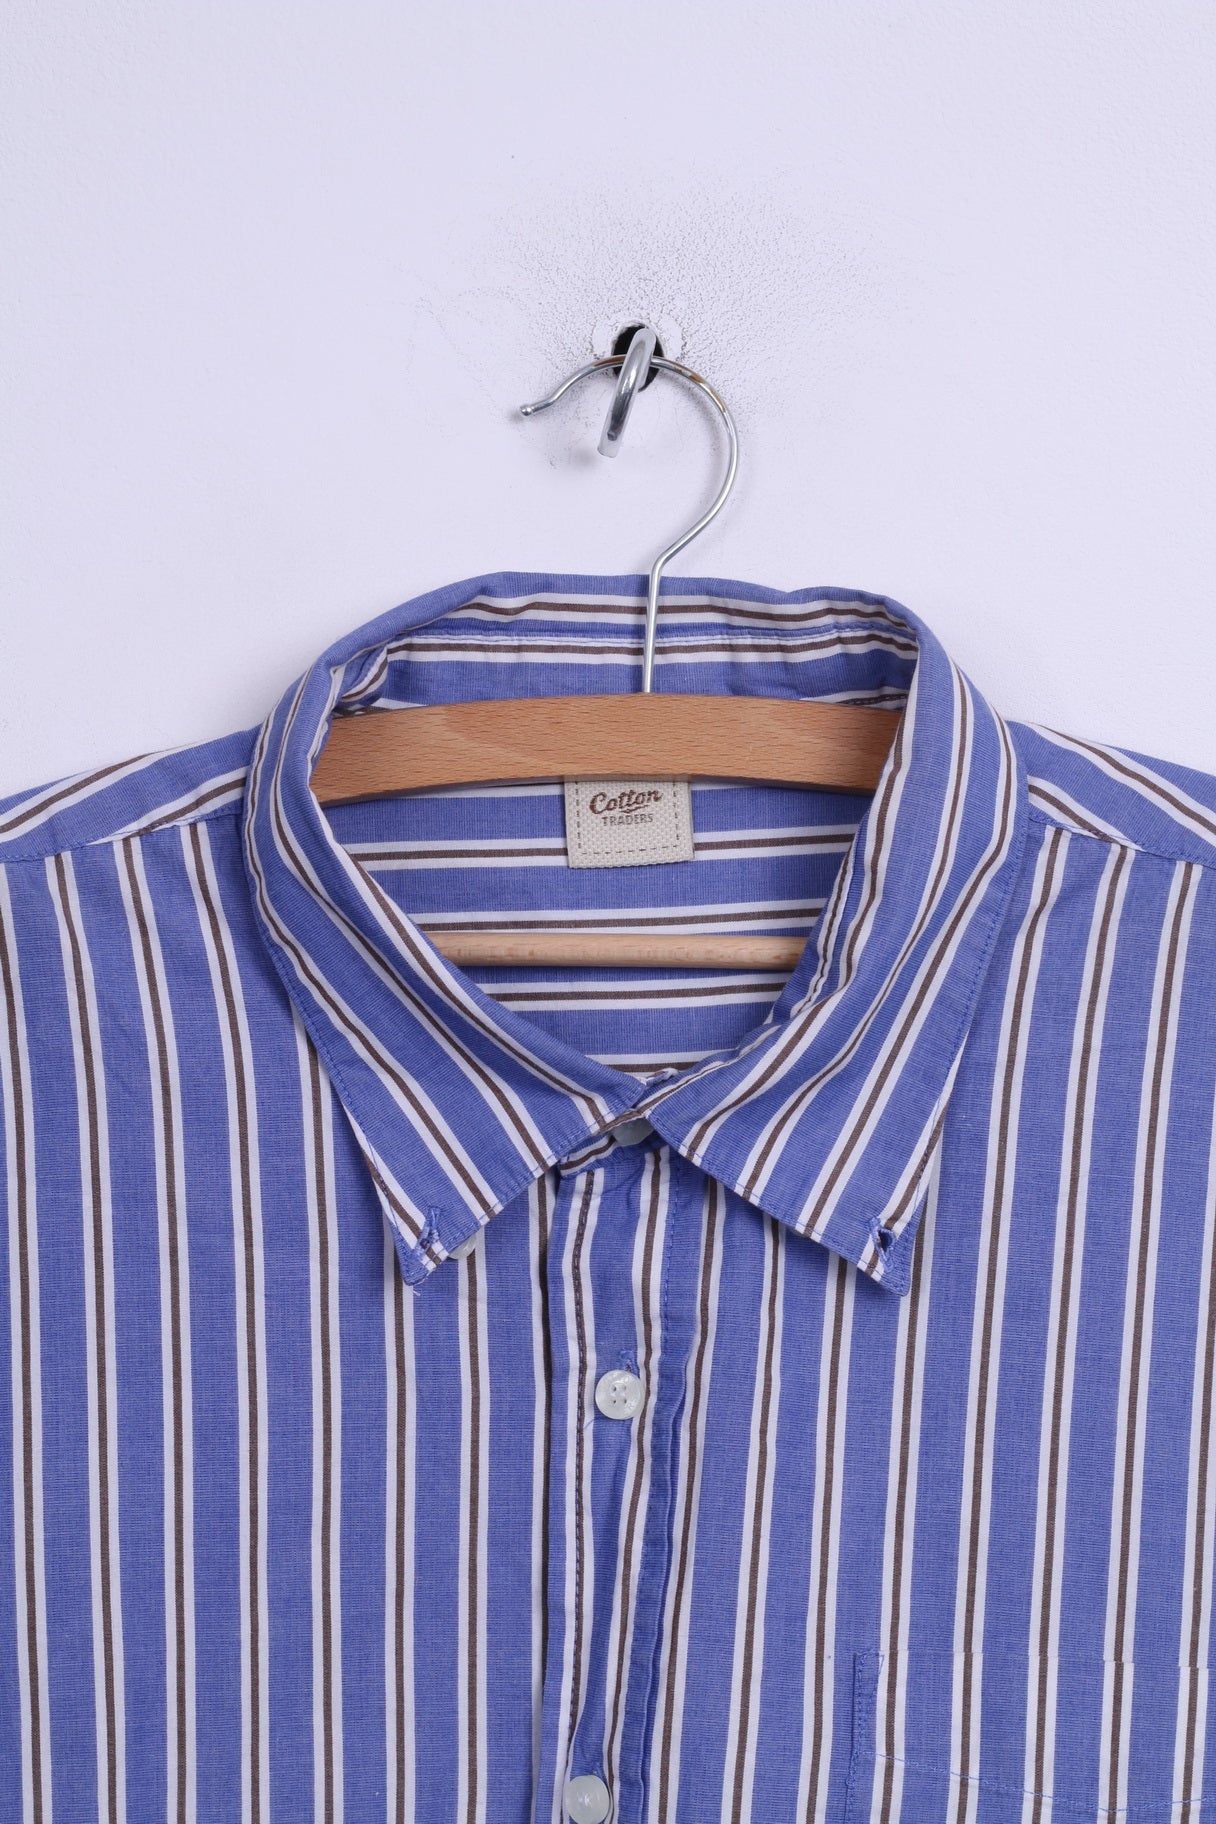 Cotton Traders Mens XL Casual Shirt Button Down Collar Striped